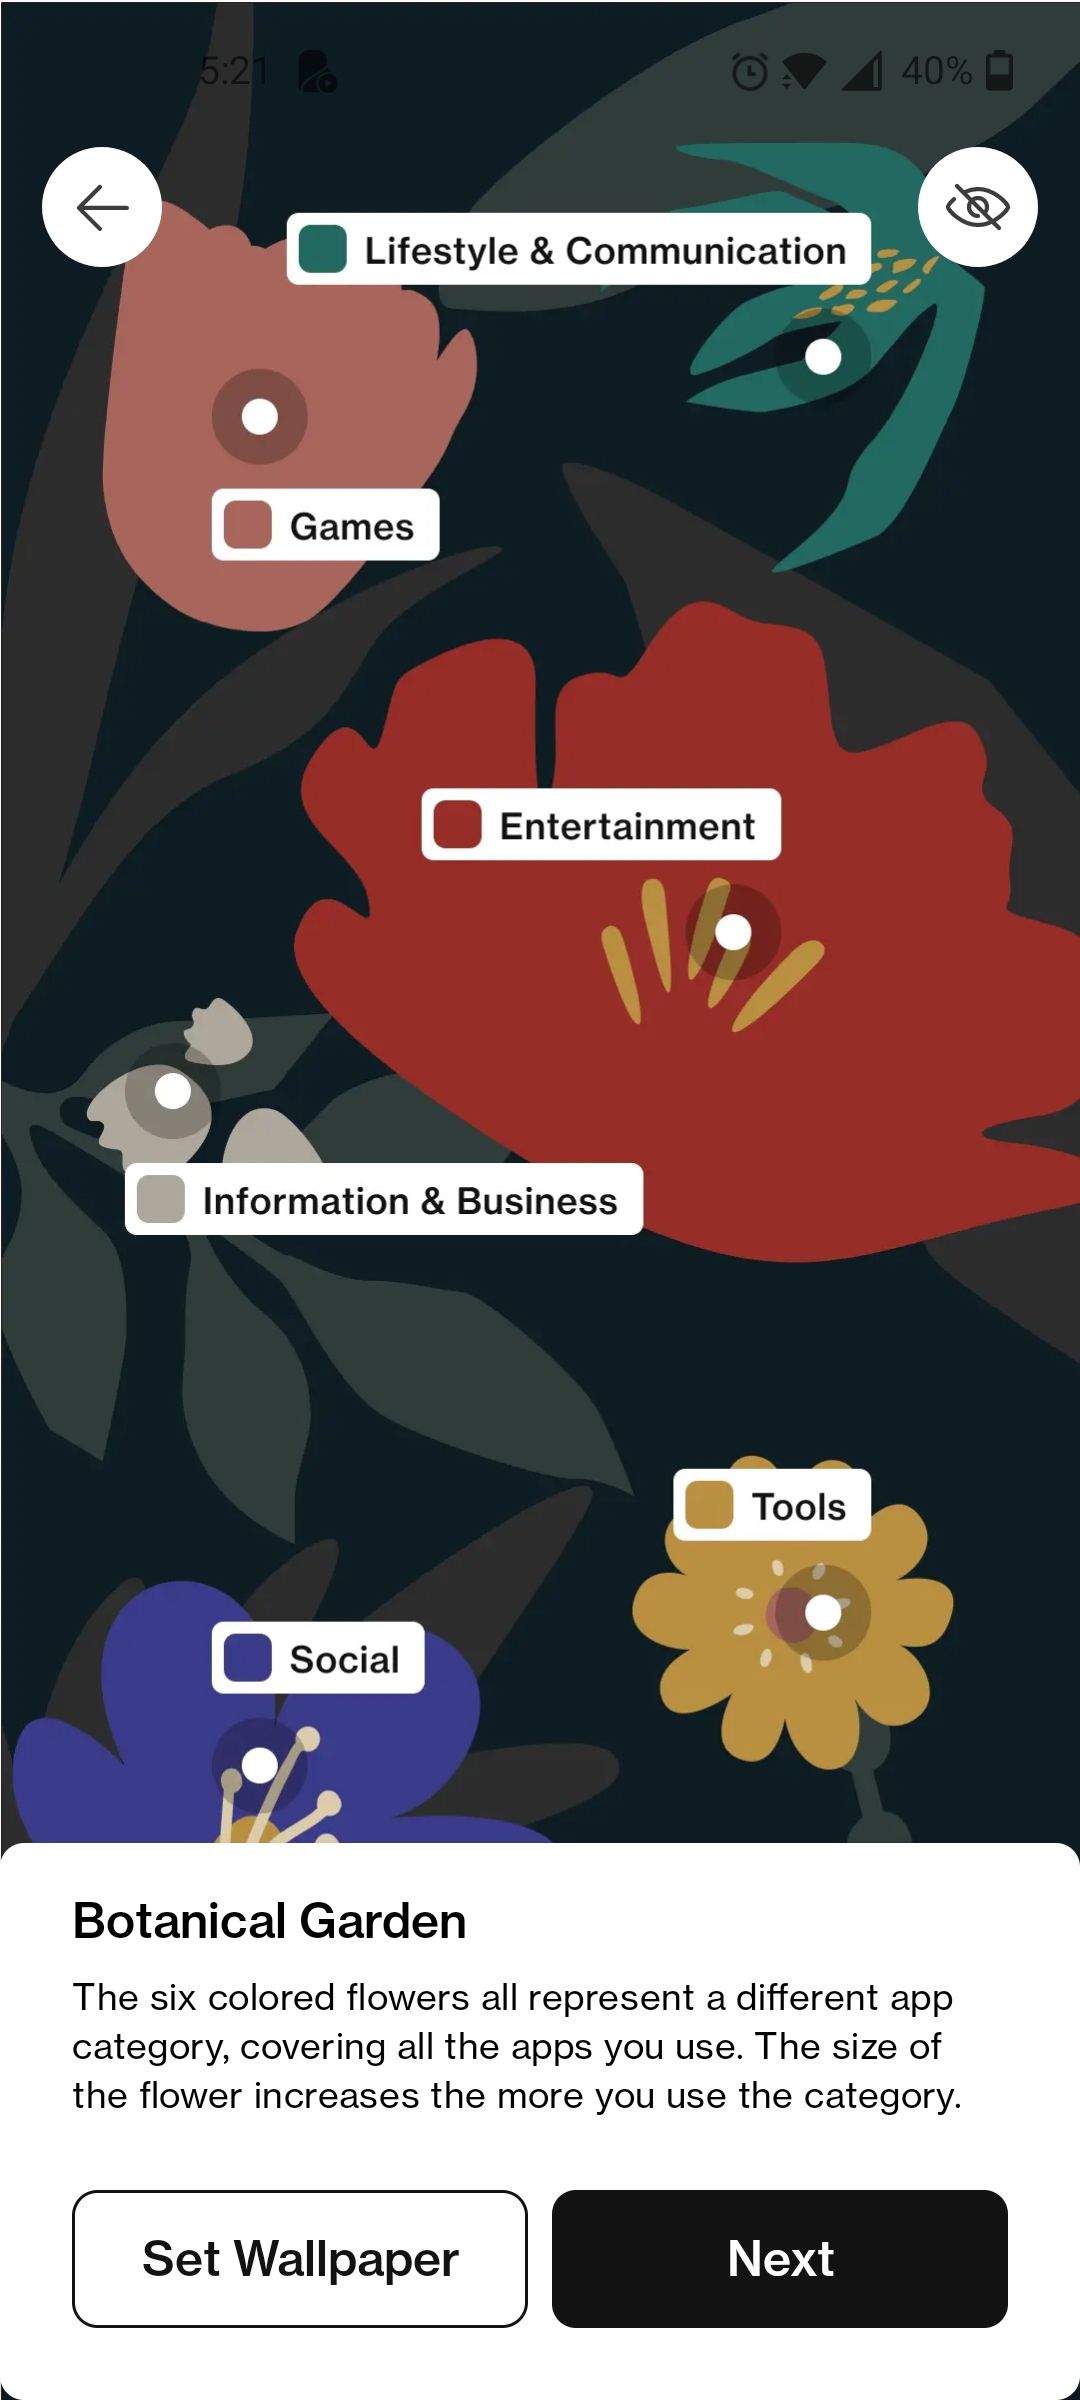 Botanical garden wallpaper displaying different app categories